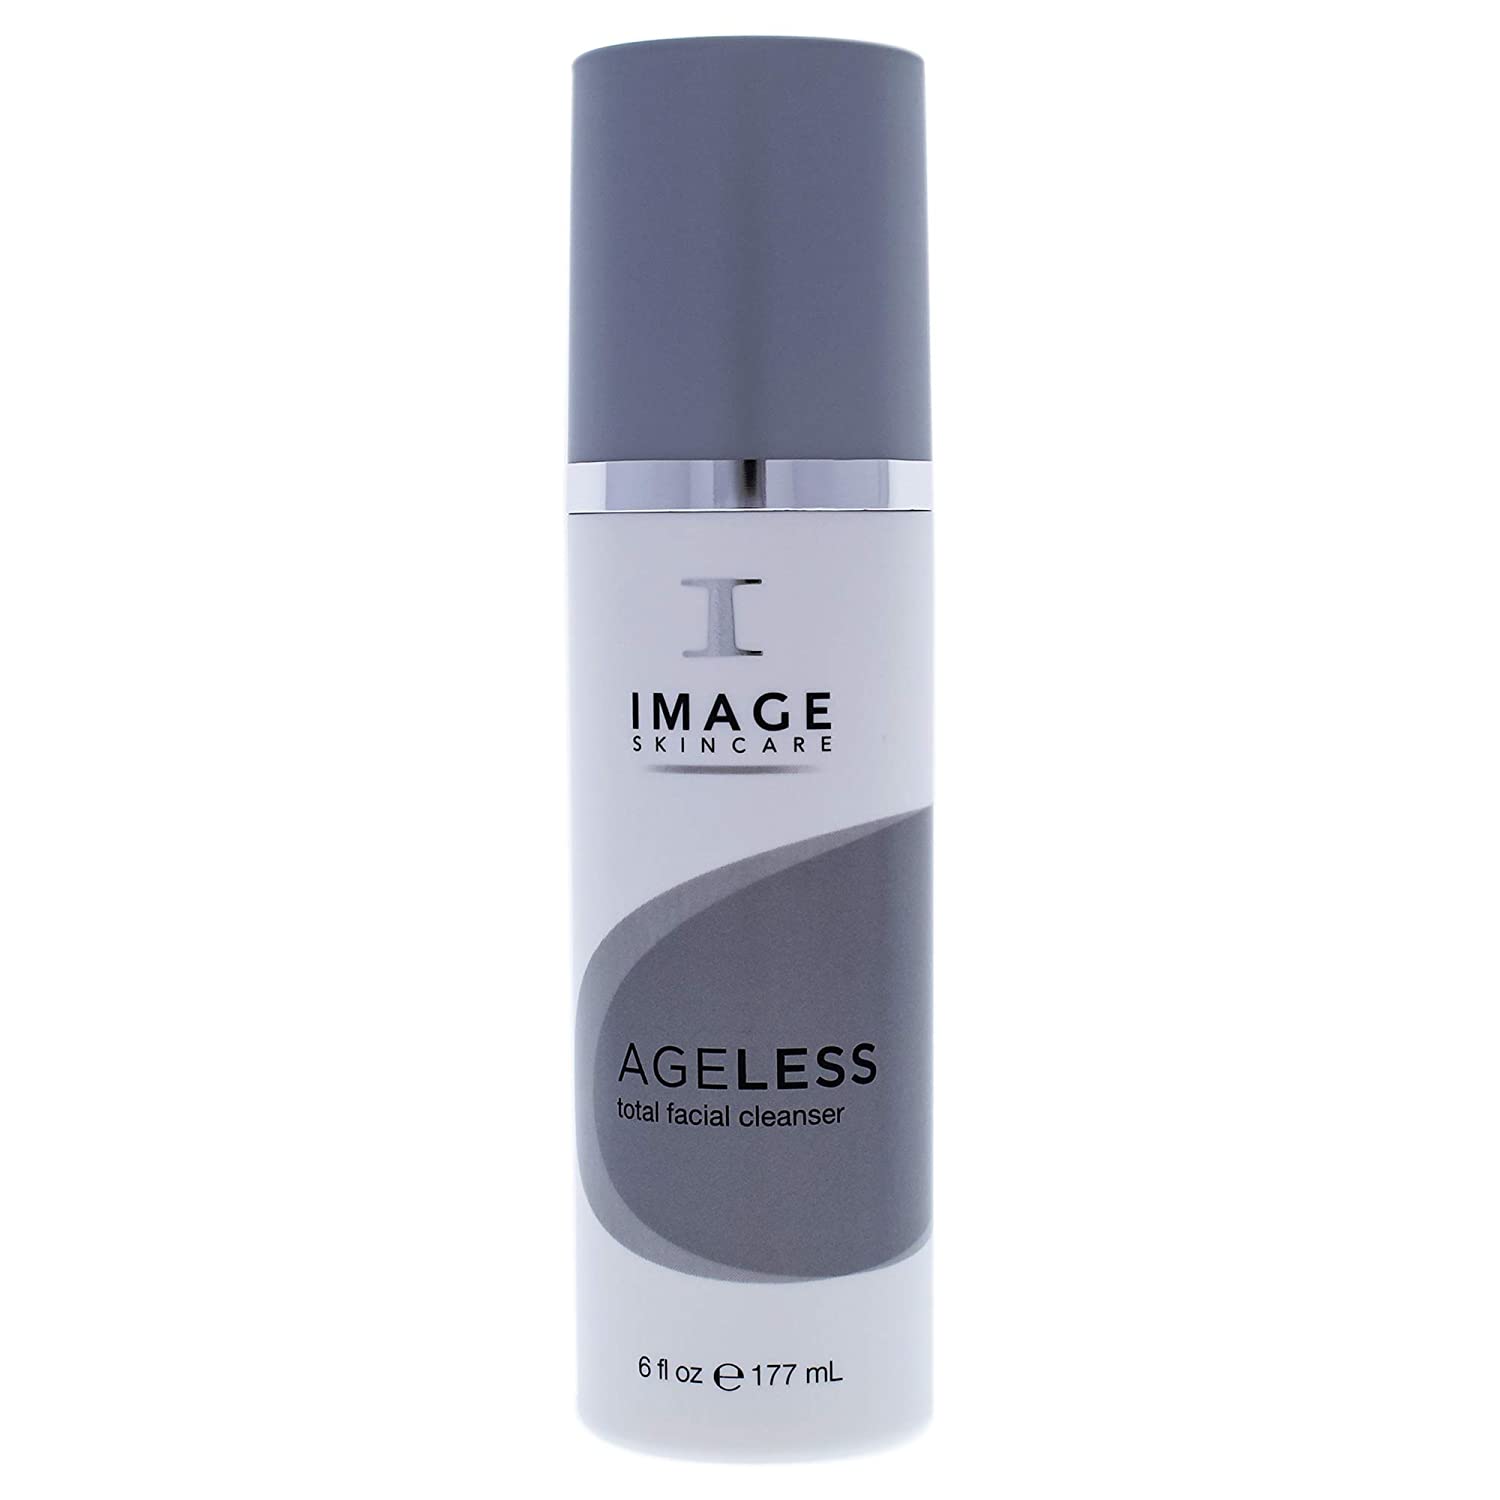 Image Skincare Ag eless Total Facial Clean ser 6 oz - image 2 of 7